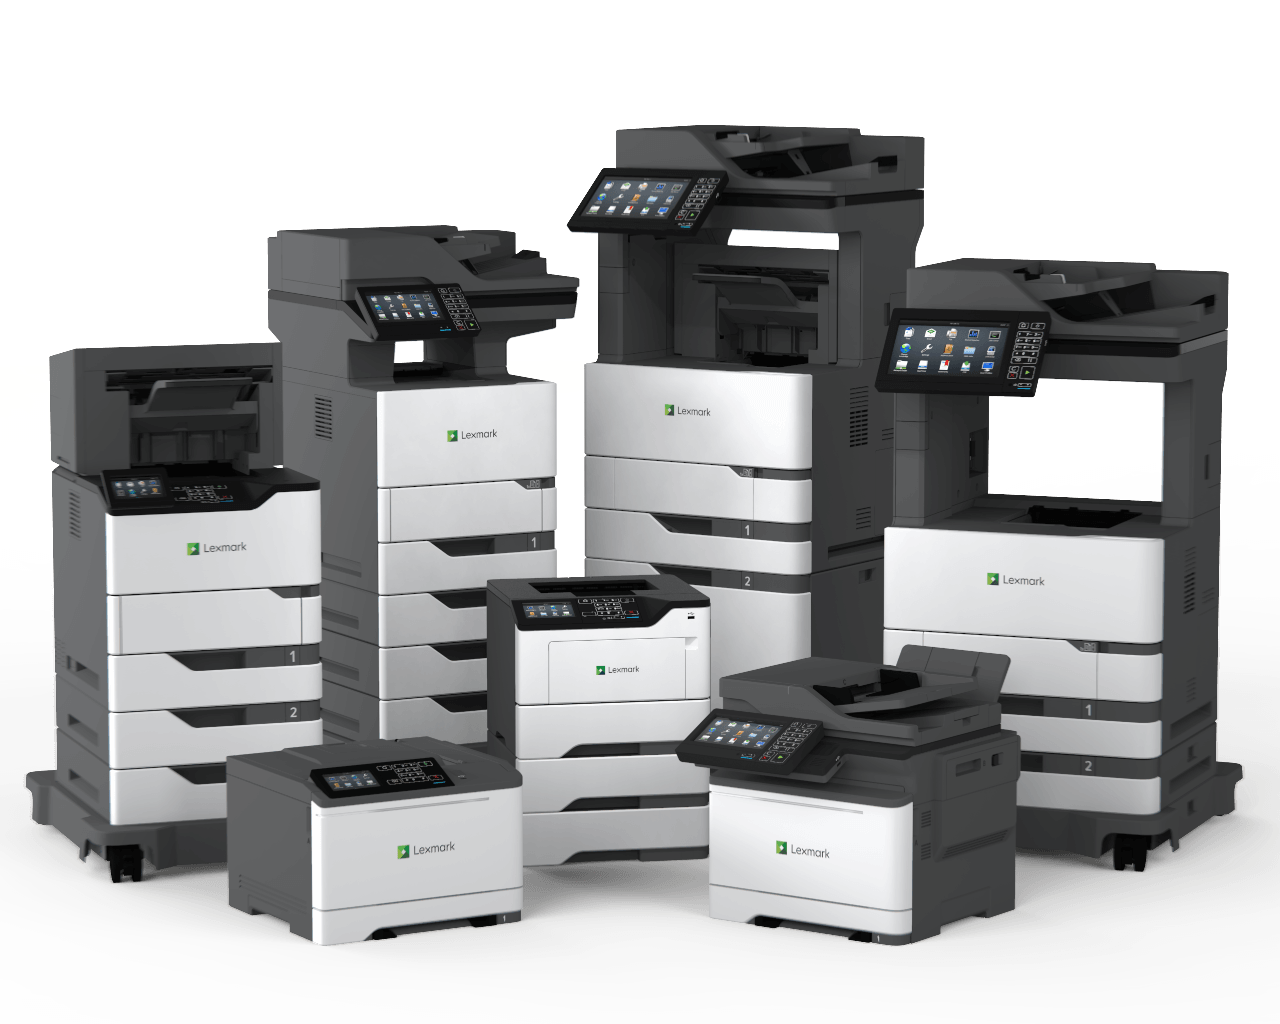 Lexmark Printers- Call for custom price and availability Data